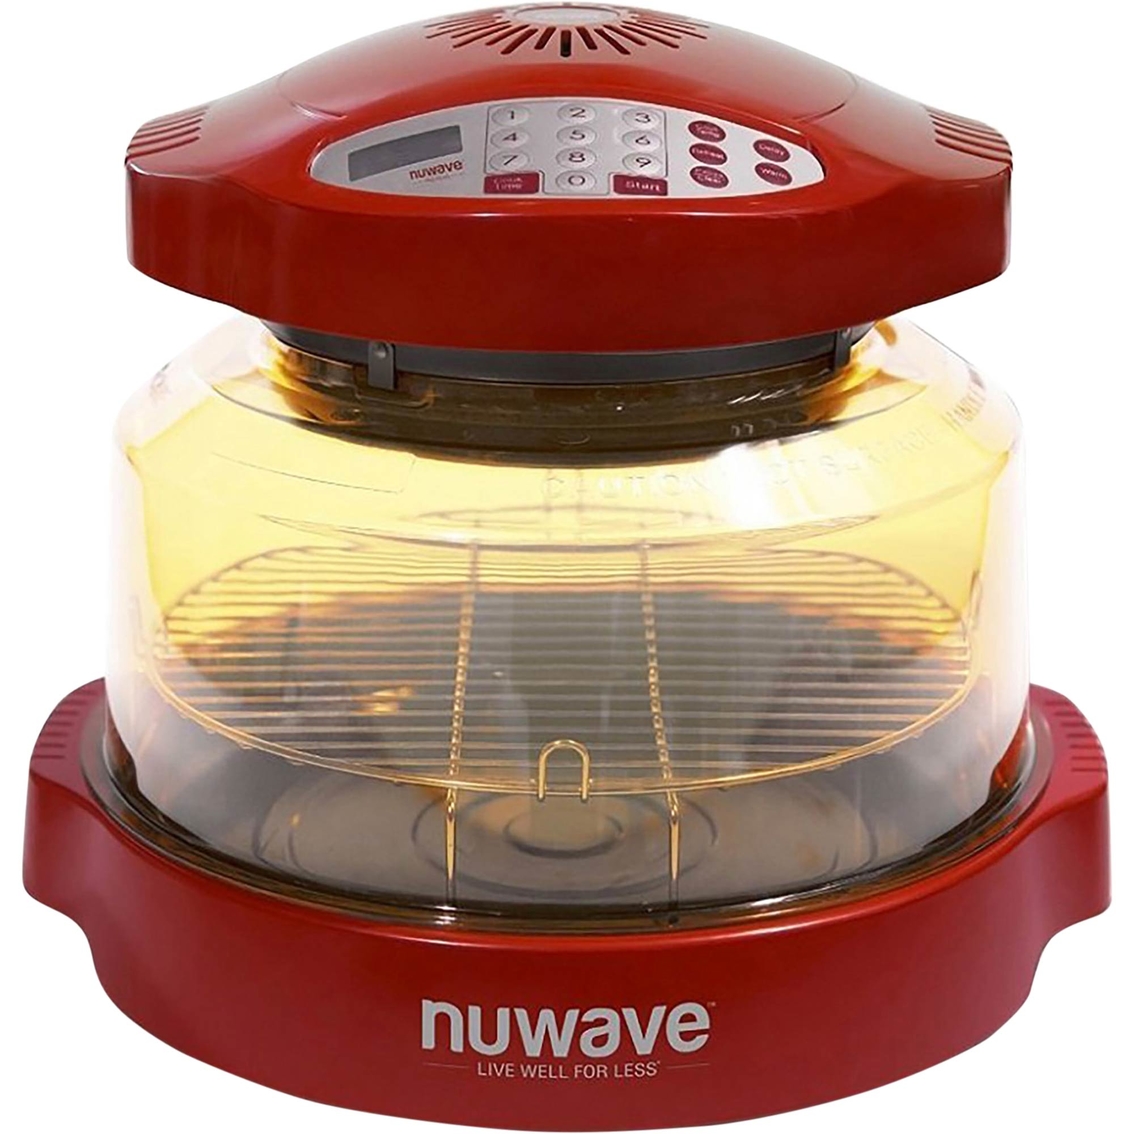 NuWave Oven Pro Plus - Image 2 of 2